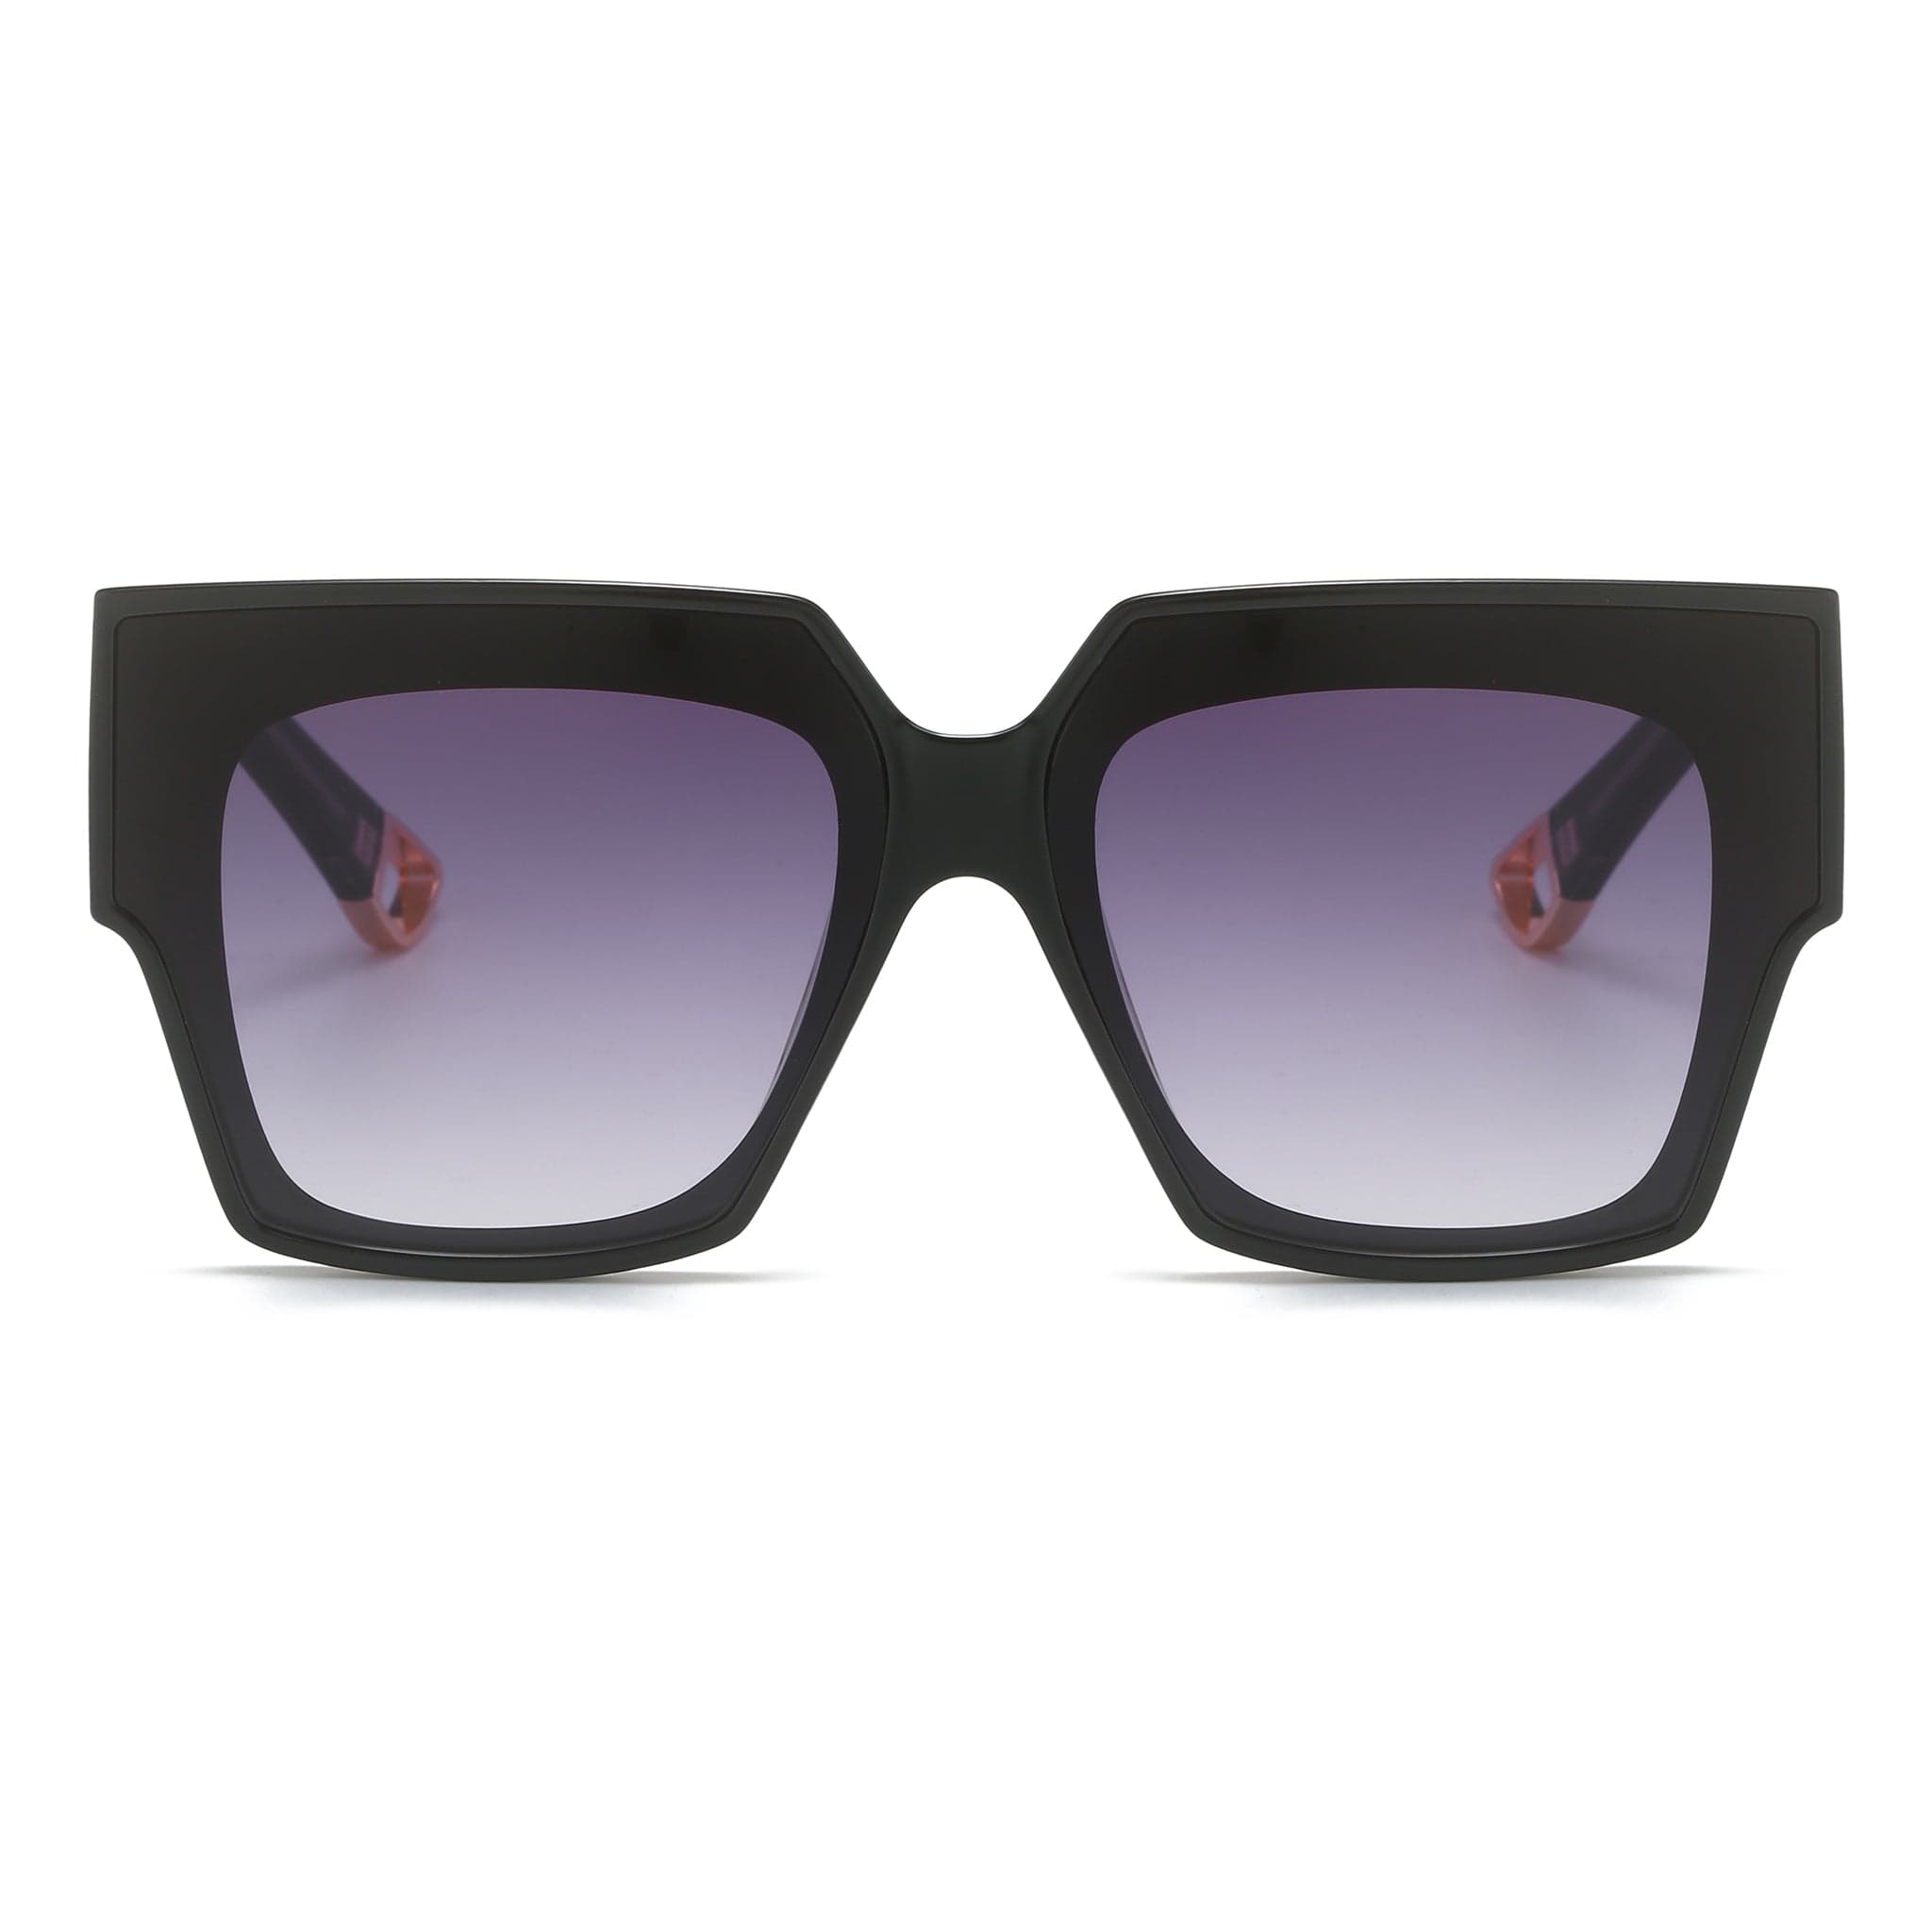 Buy Sunwear Unisex Square latest Sunglasses Stylish New Lens Design Mirror  Multi Role Frame Goggles Sunglasses For Men, Women Unisex. at Amazon.in